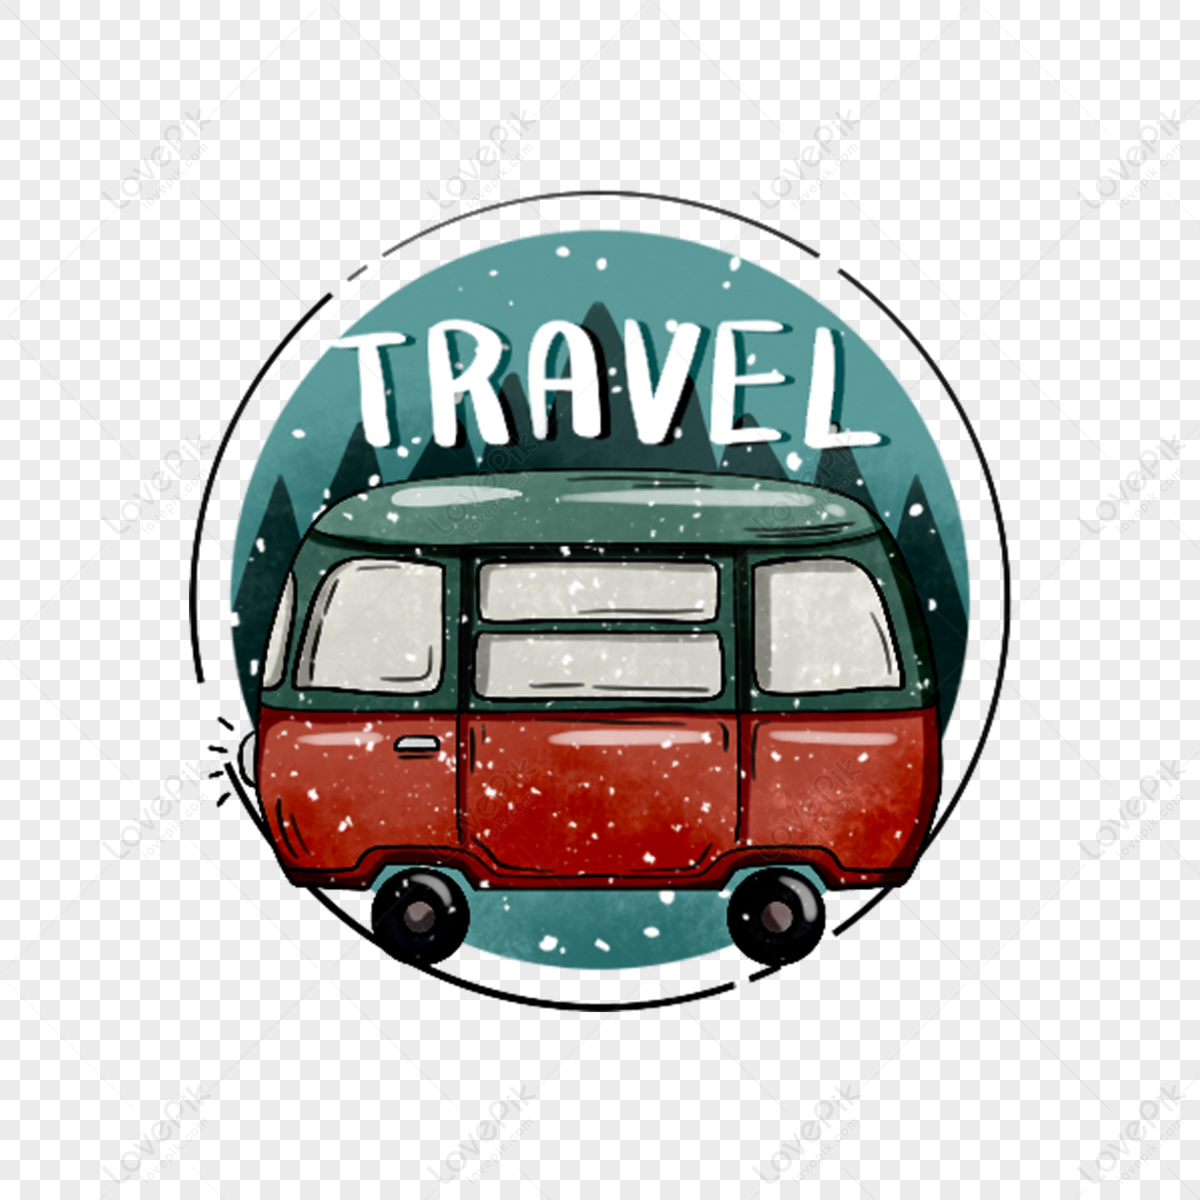 Group student travel bus,adventure,symbol,road png transparent background